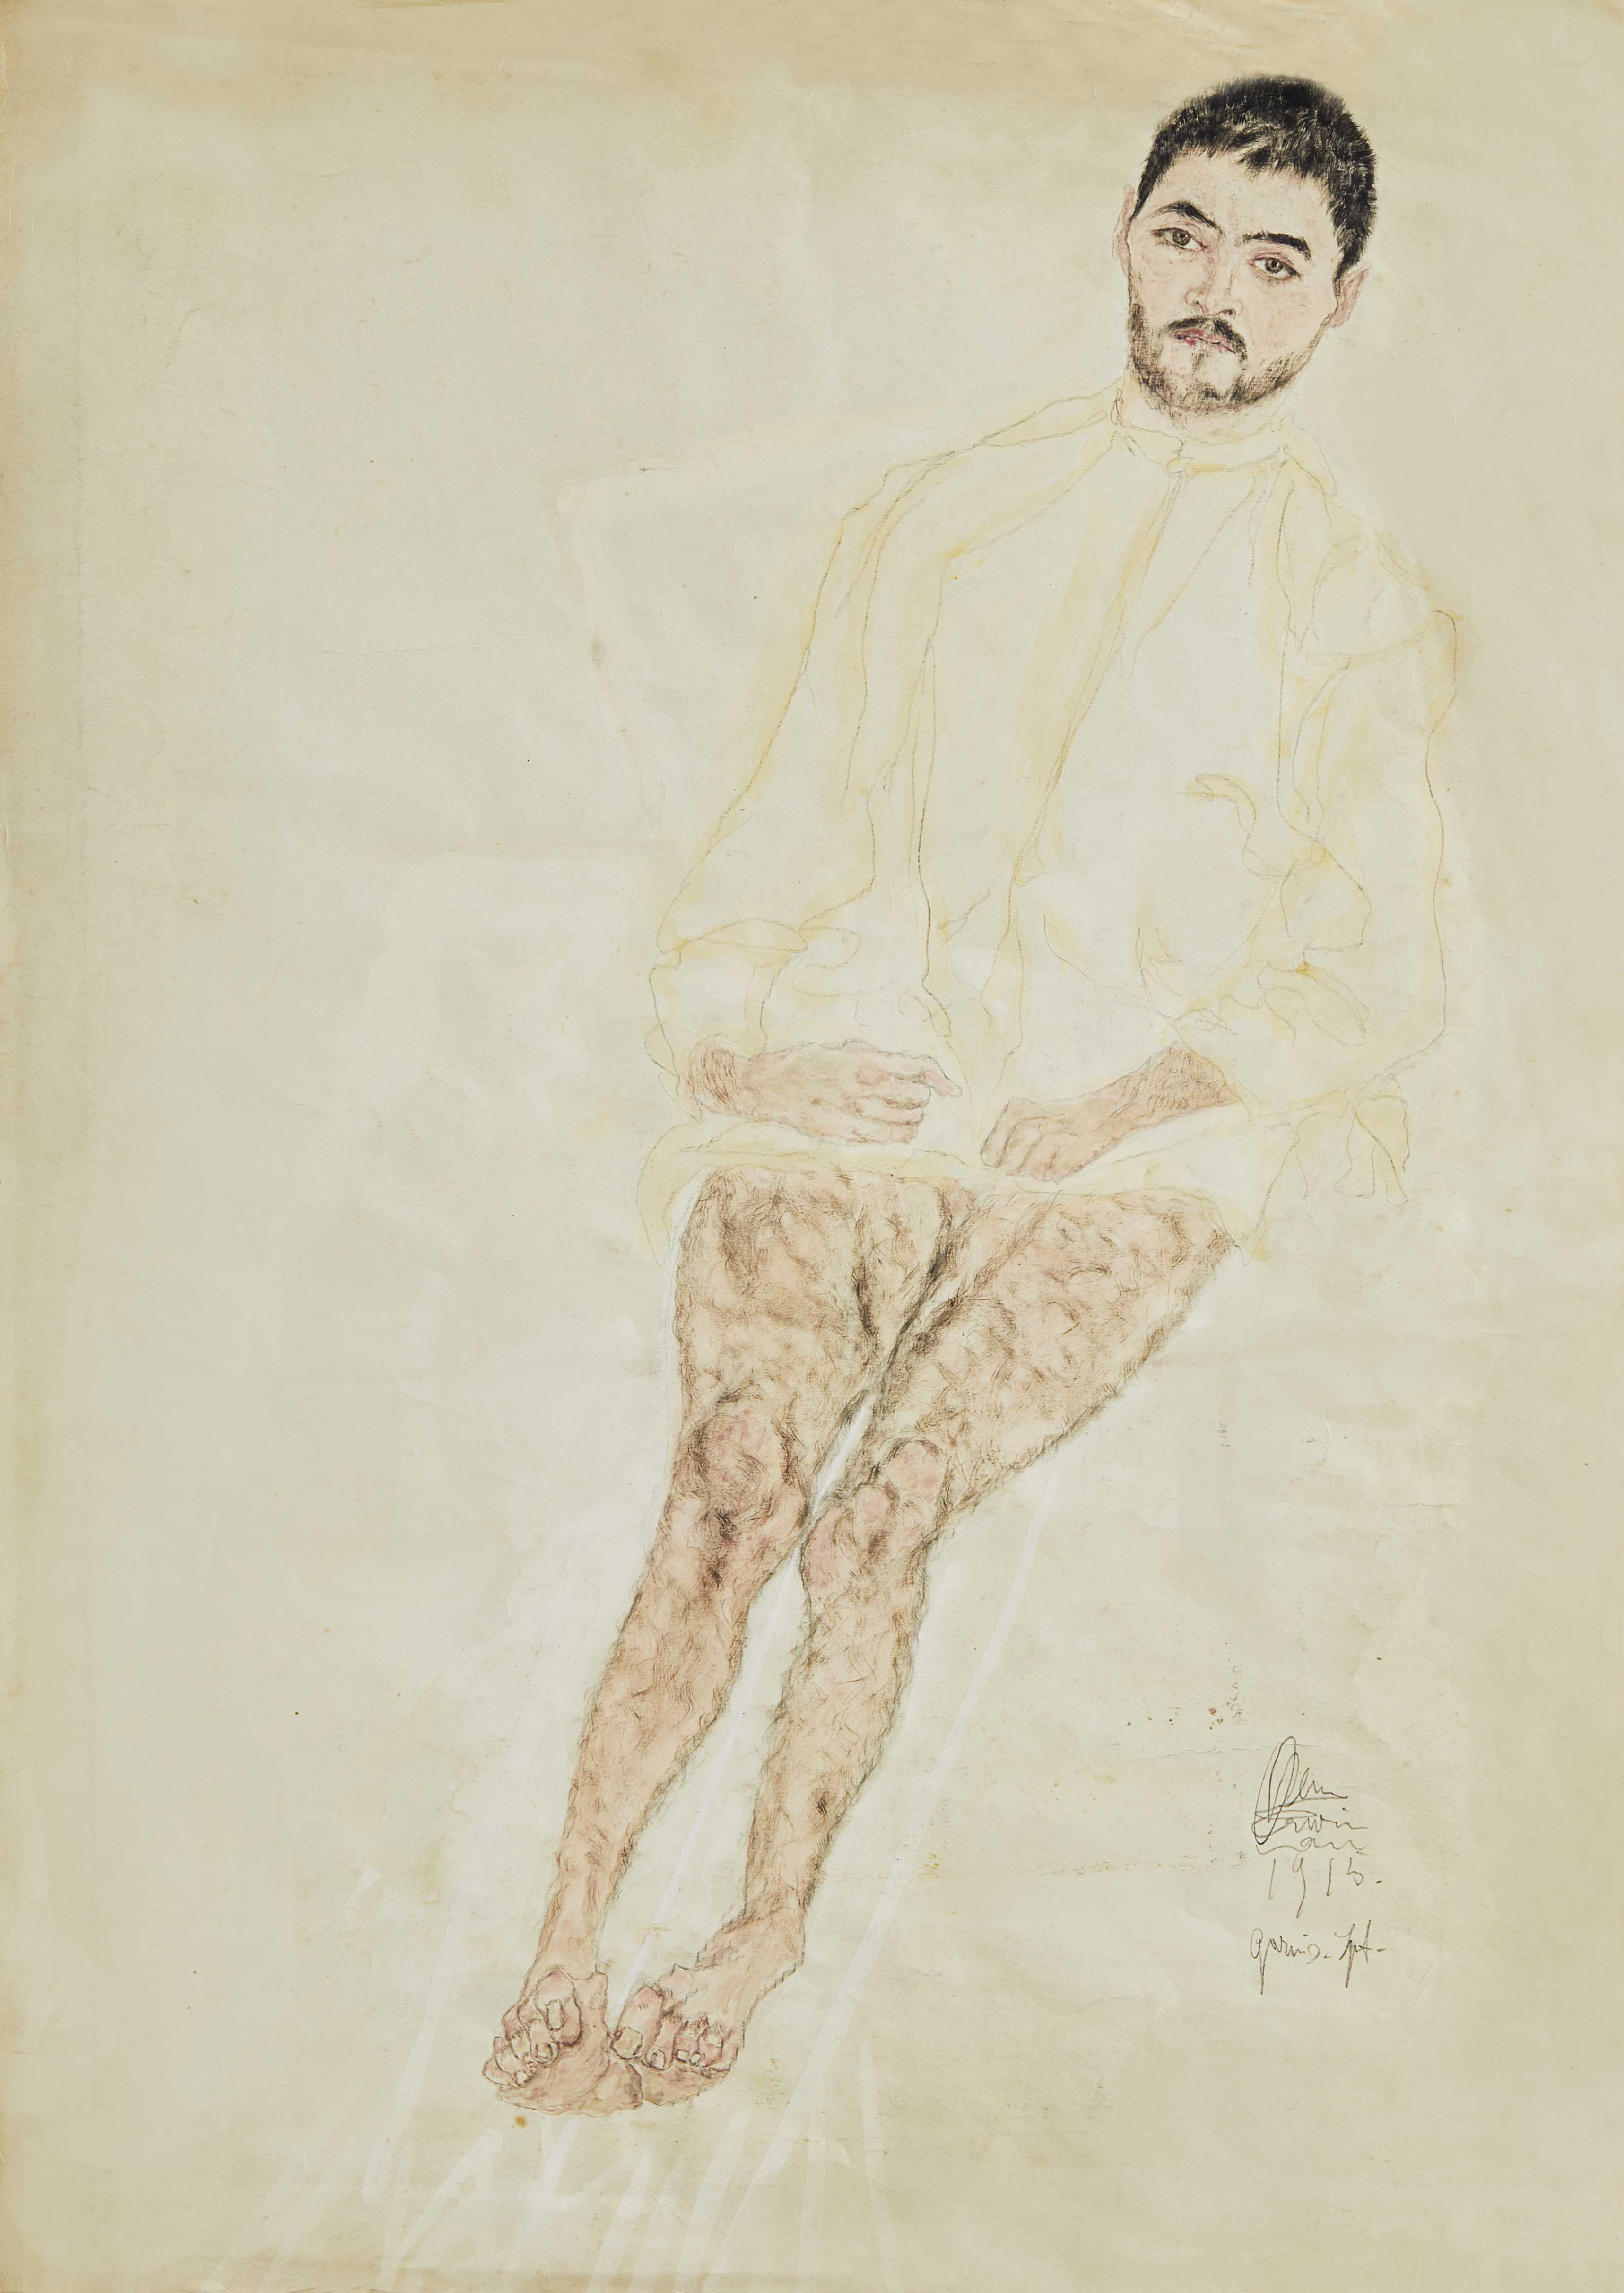 ERWIN DOMINIK OSEN, Patientenportrait, 1915 © Privatbesitz, Foto: Leopold Museum, Wien/Manfred Thumberger